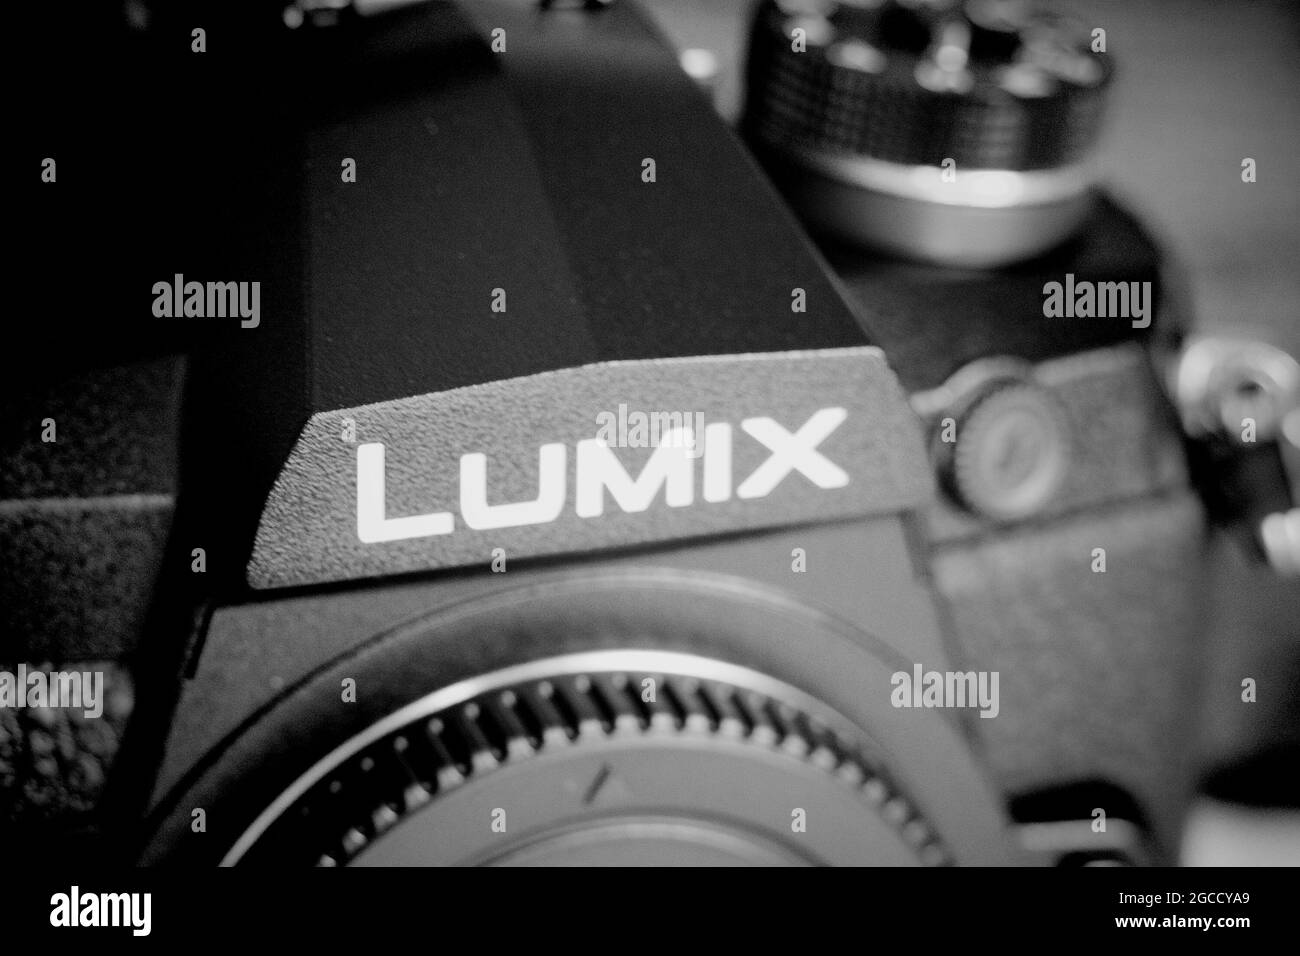 Chernihiv, Ukraine. June 21, 2021. Fragment of a Panasonic Lumix camera, close-up. Lumix logo on the camera. Illustrative editorial. Stock Photo